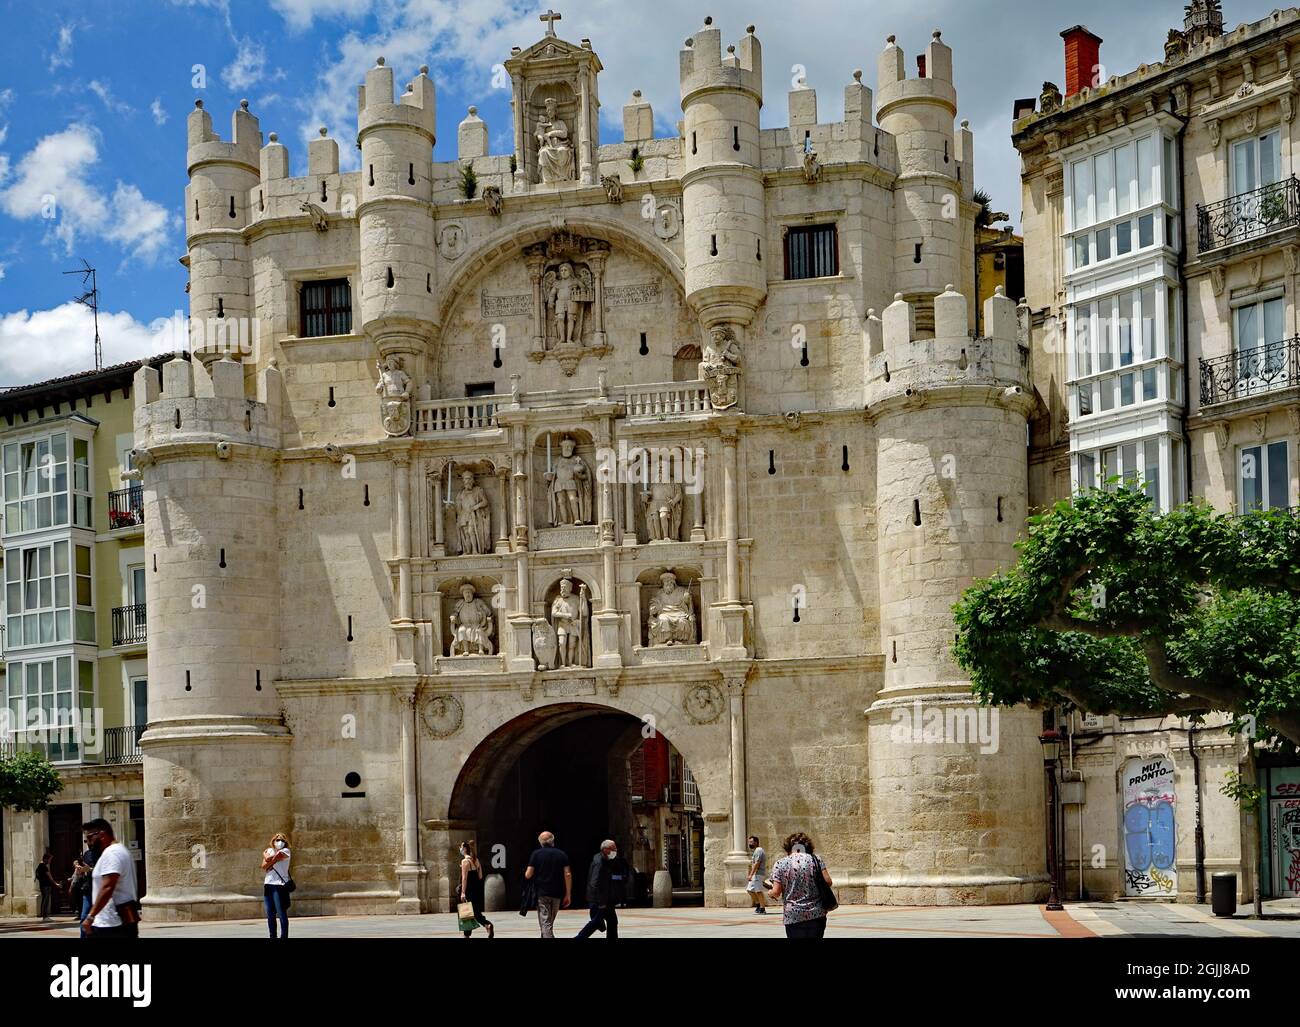 Way of Saint James: Arco de Santa Maria, Burgos, Spanien 2021 Stock Photo